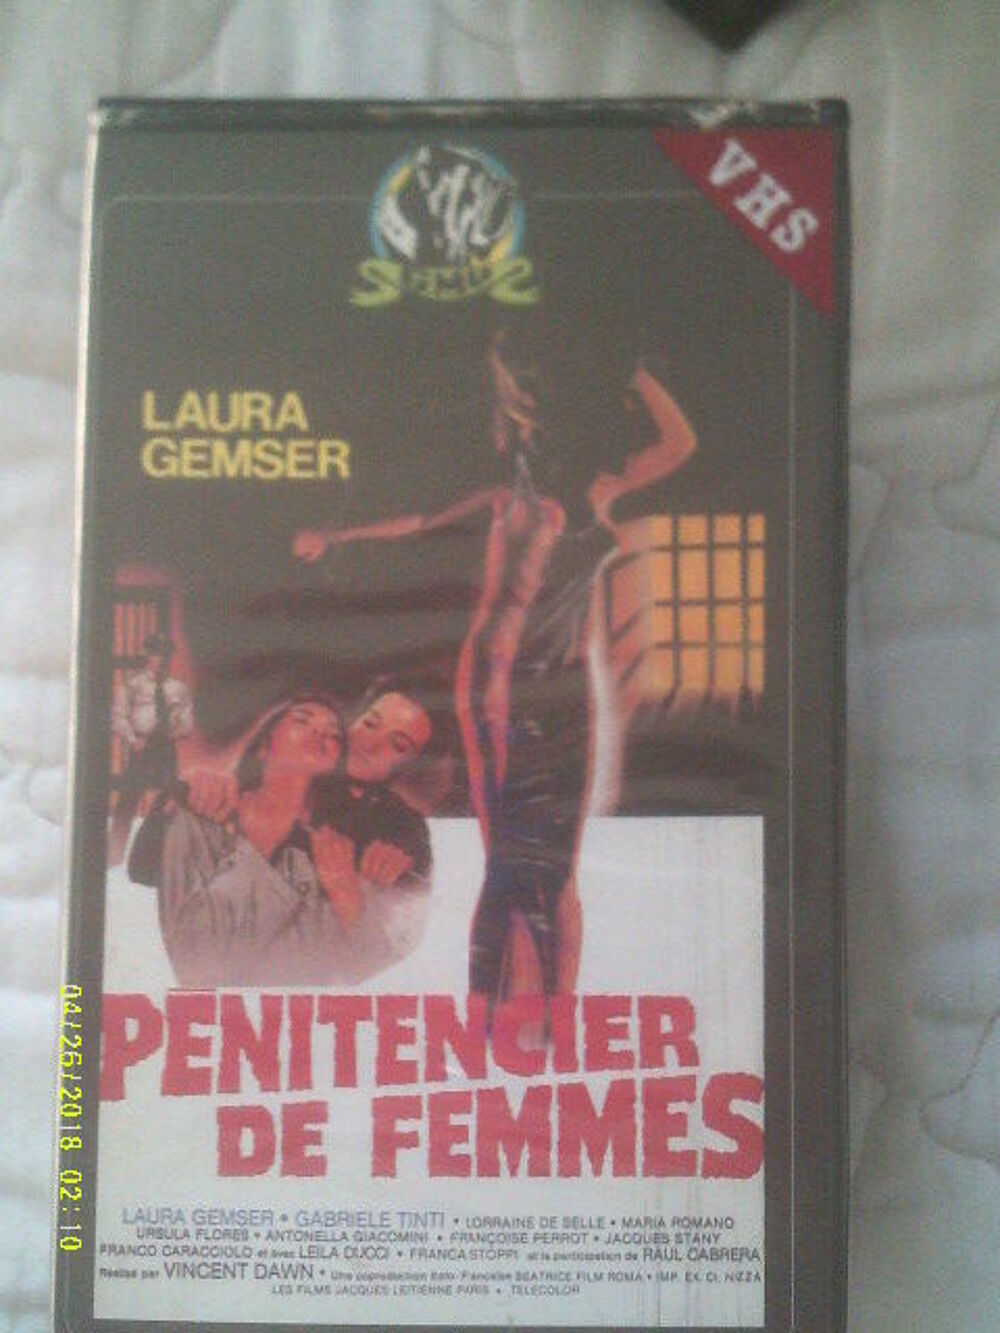 PENITENCIER DE FEMMES avec laura Gemsler DVD et blu-ray